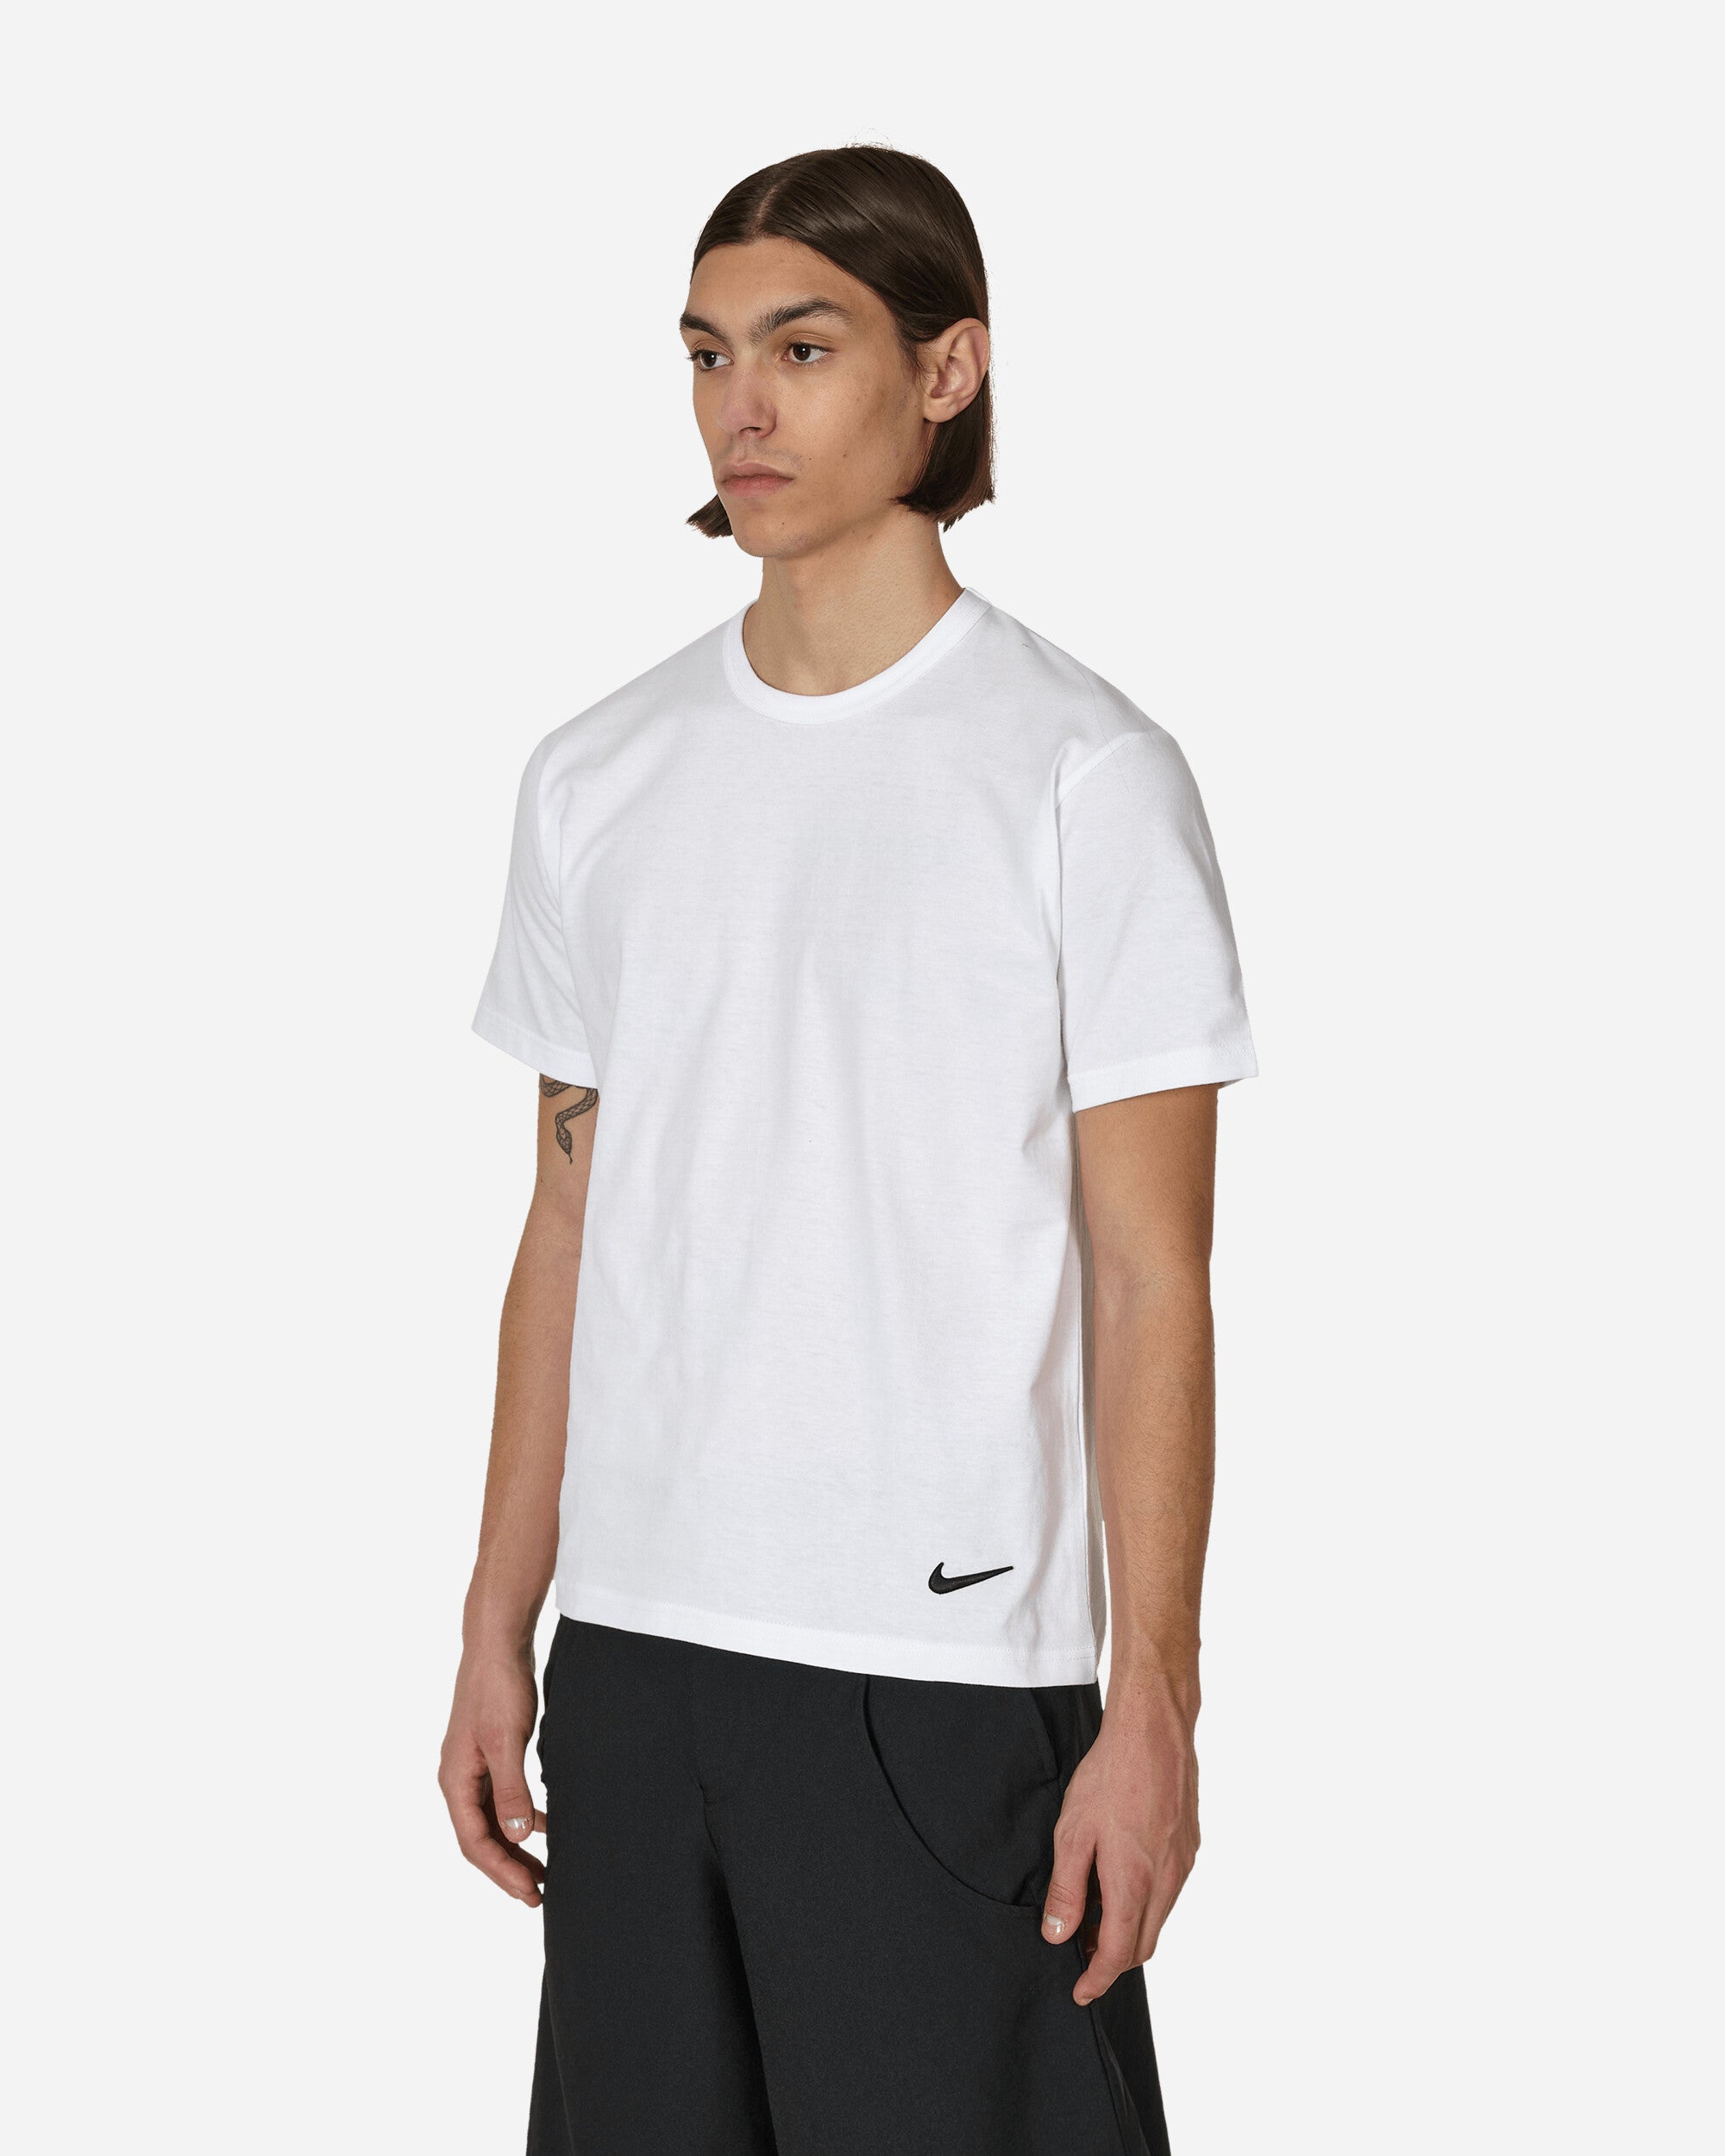 Comme Des Garçons Black T-Shirt White/Black T-Shirts Shortsleeve 1K-T107-S23 2